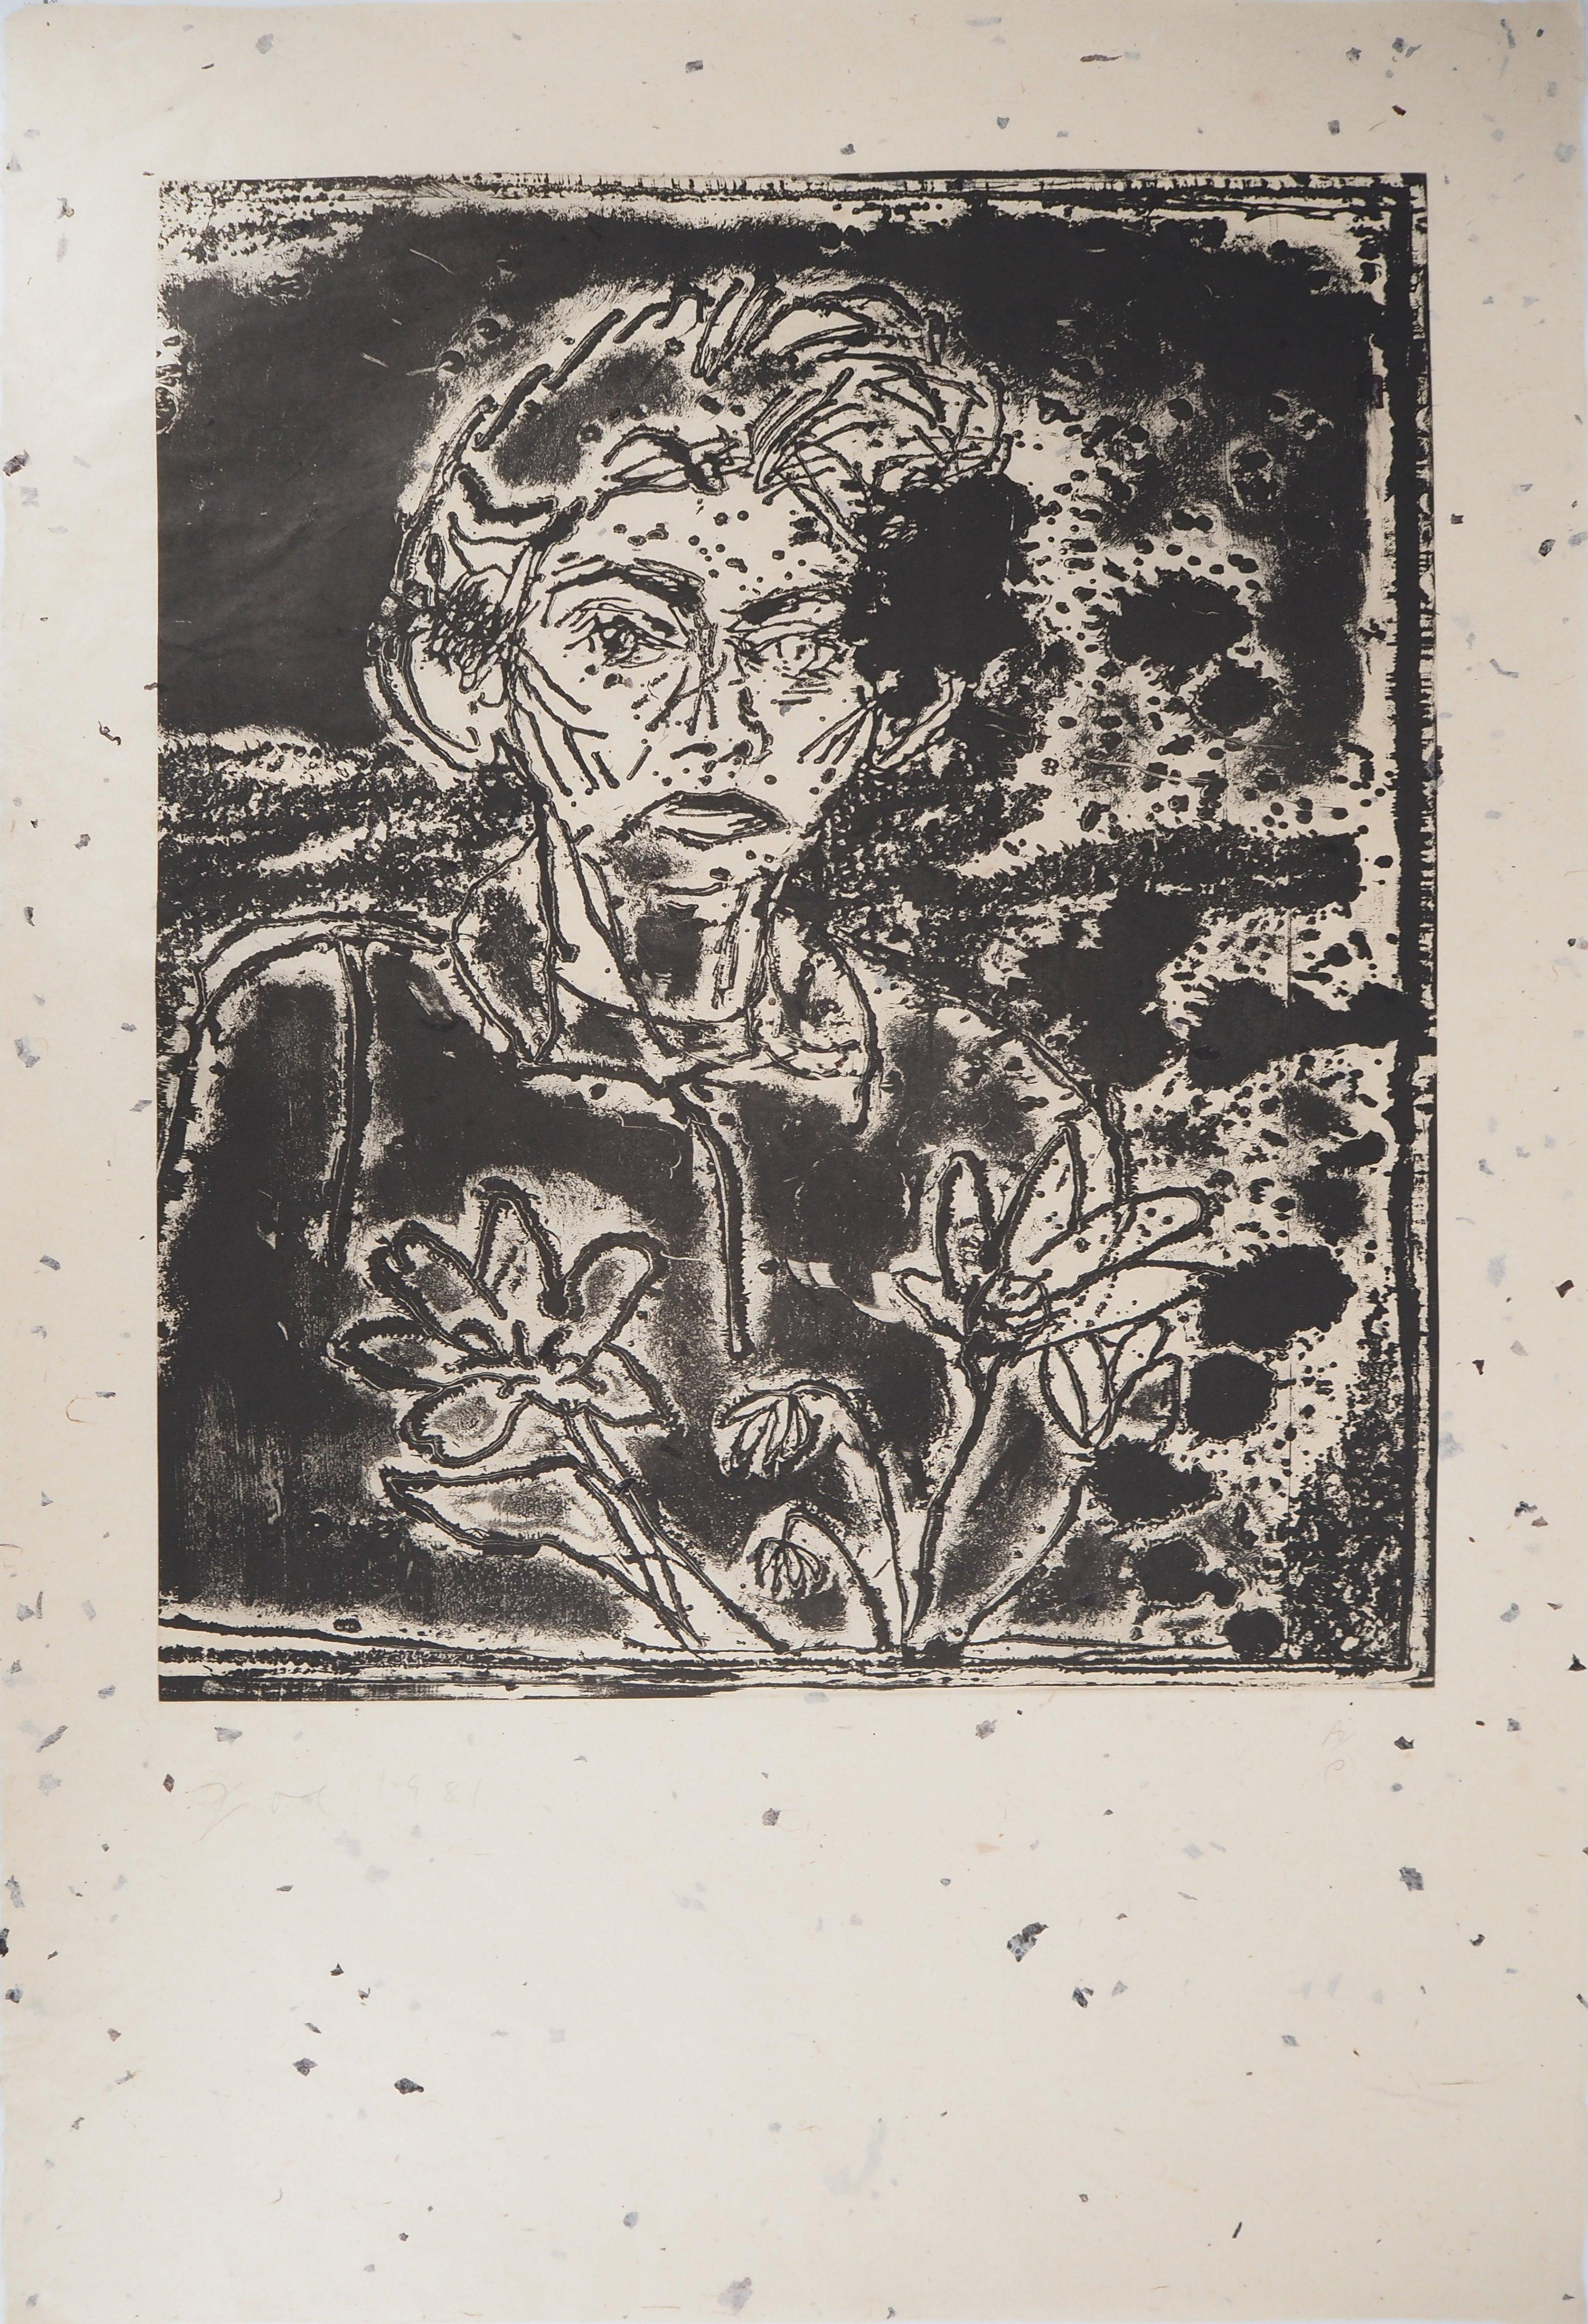 Nancy outside in july XXIII - Original handsigned etching - Print by Jim Dine